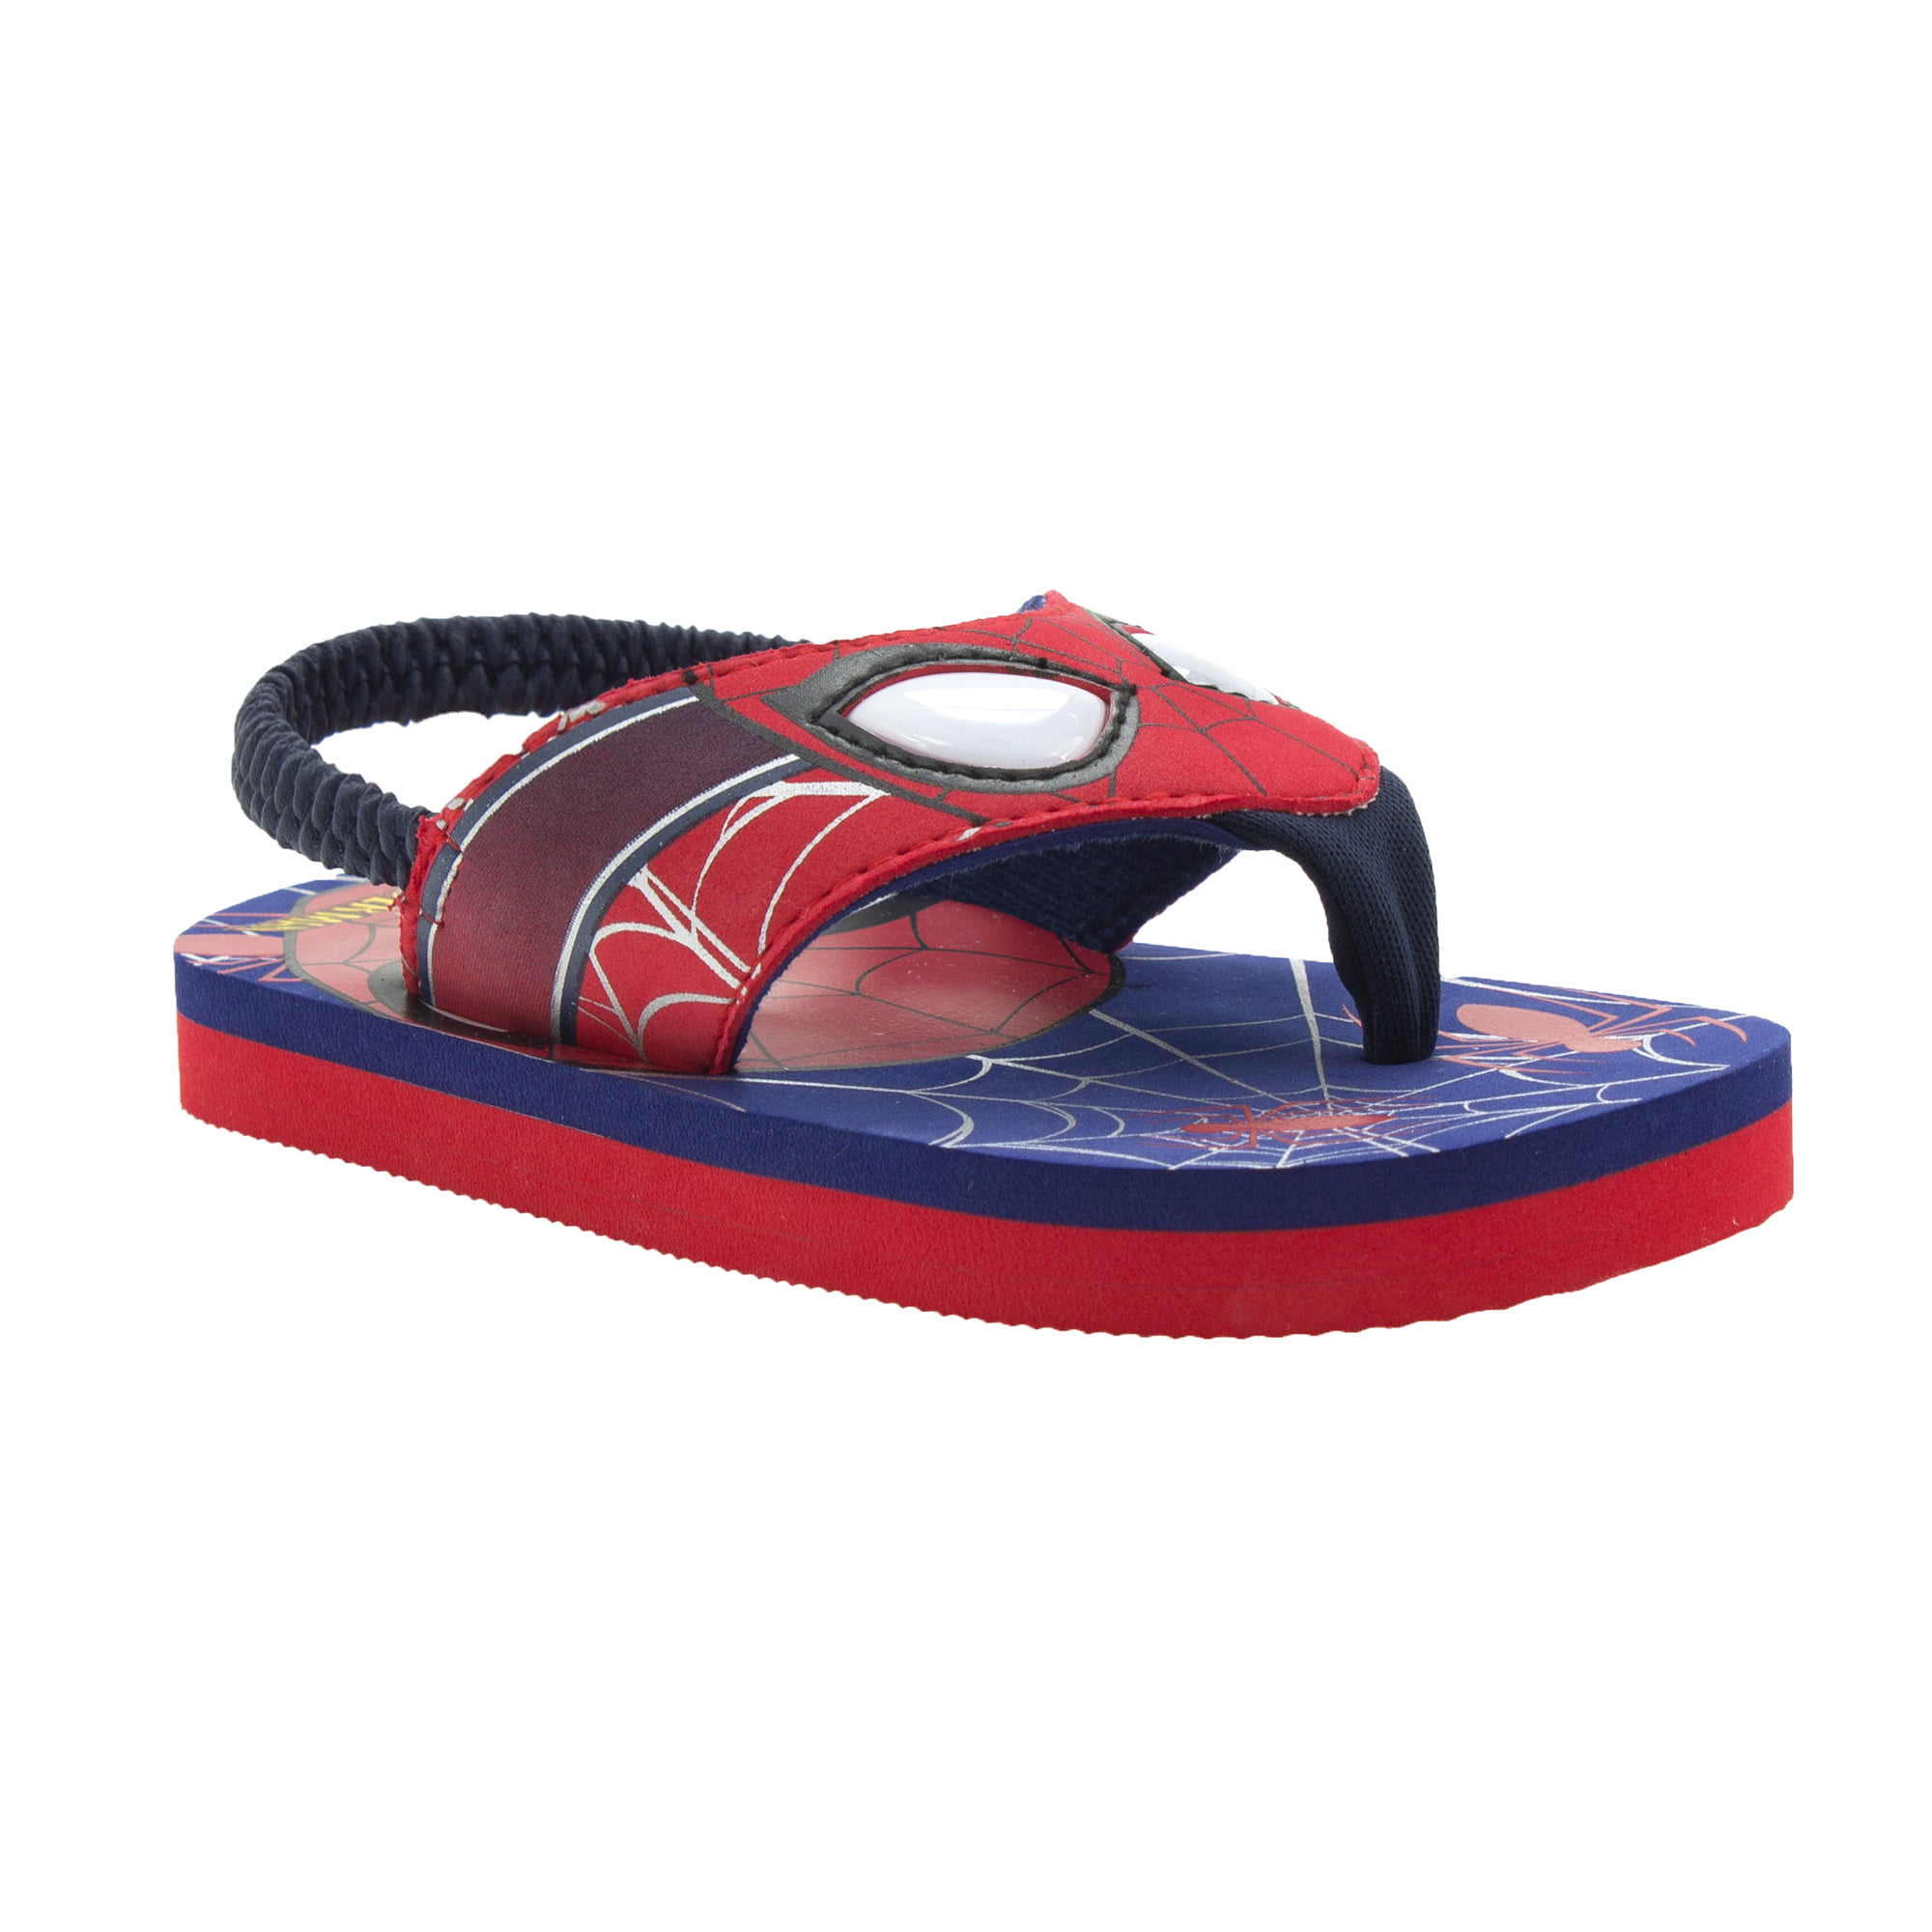 Boys Marvel Spiderman Flip flops Sandals Sizes 7-8.5 10-12 13-2 Shoe size 